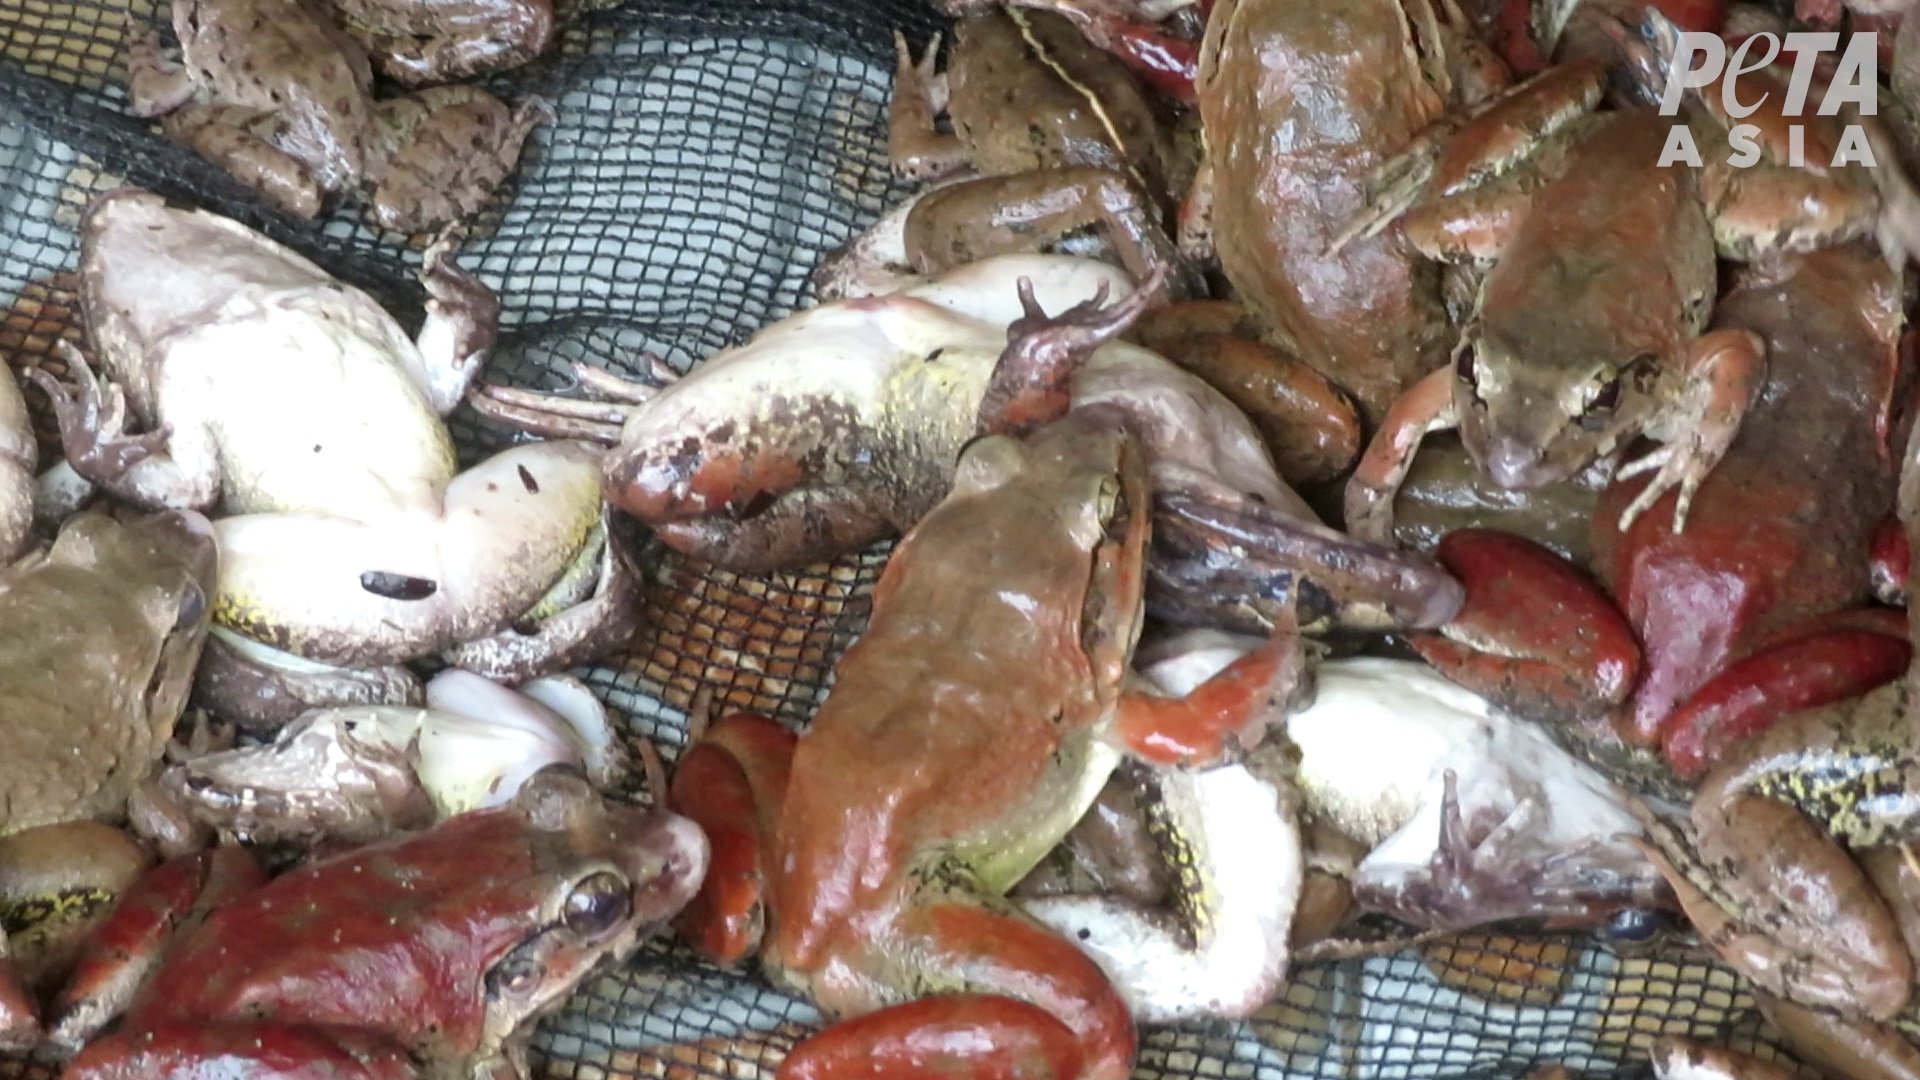 https://www.peta.org.au/wp-content/uploads/Frogs-PETA-Asia-Investigation-Frog-Leg-Industry.jpg